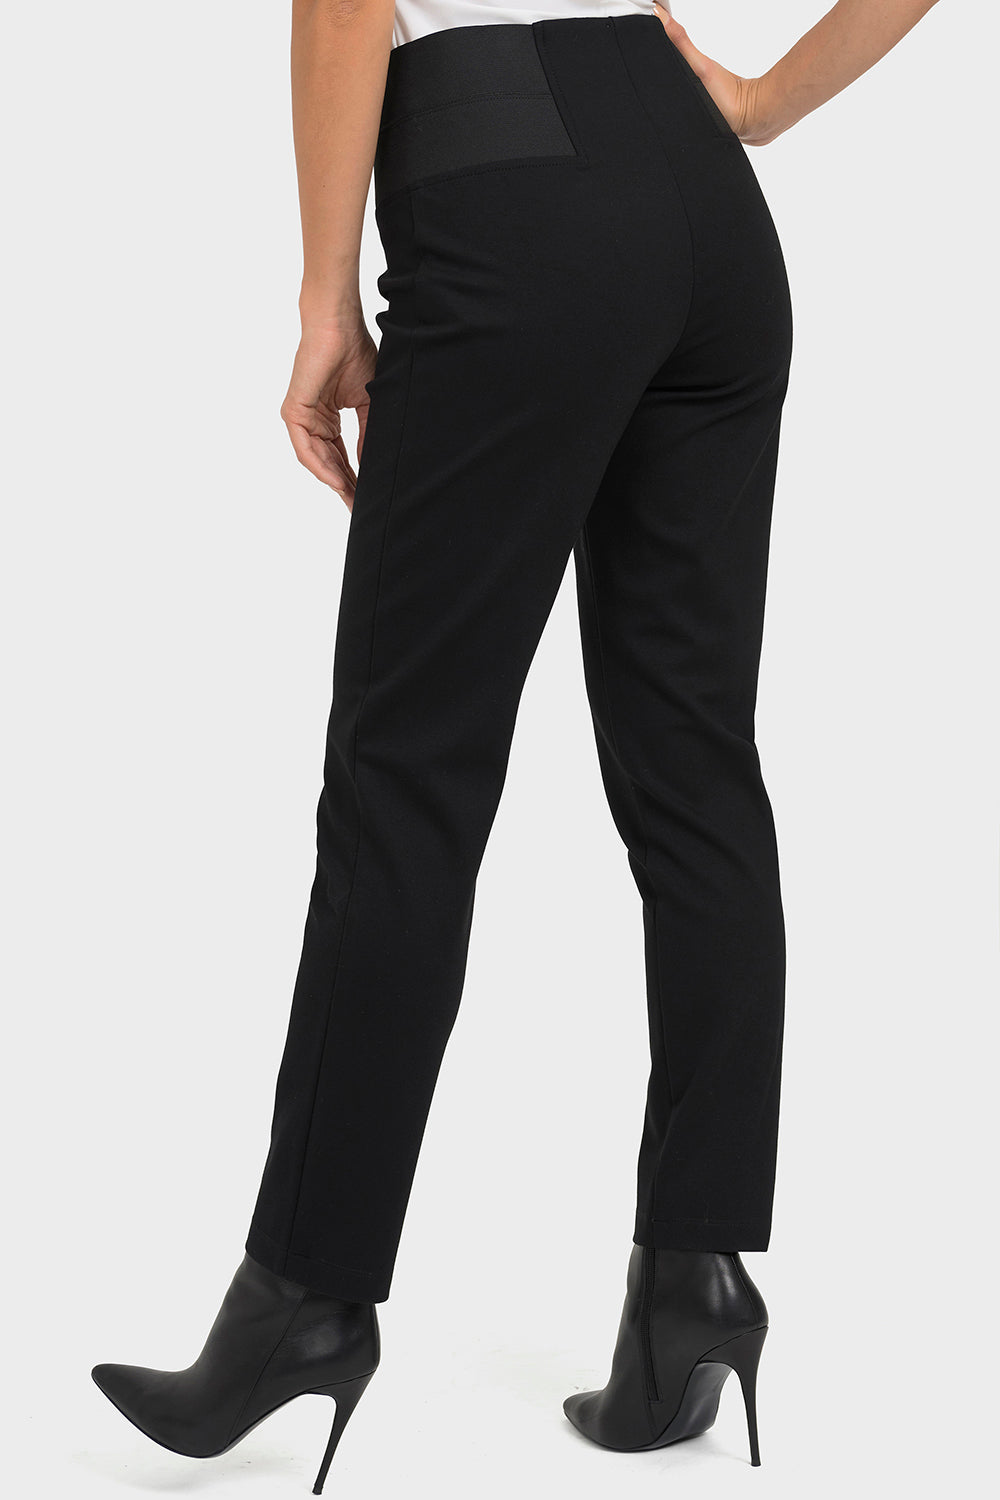 Joseph Ribkoff Black Pants Style 193361